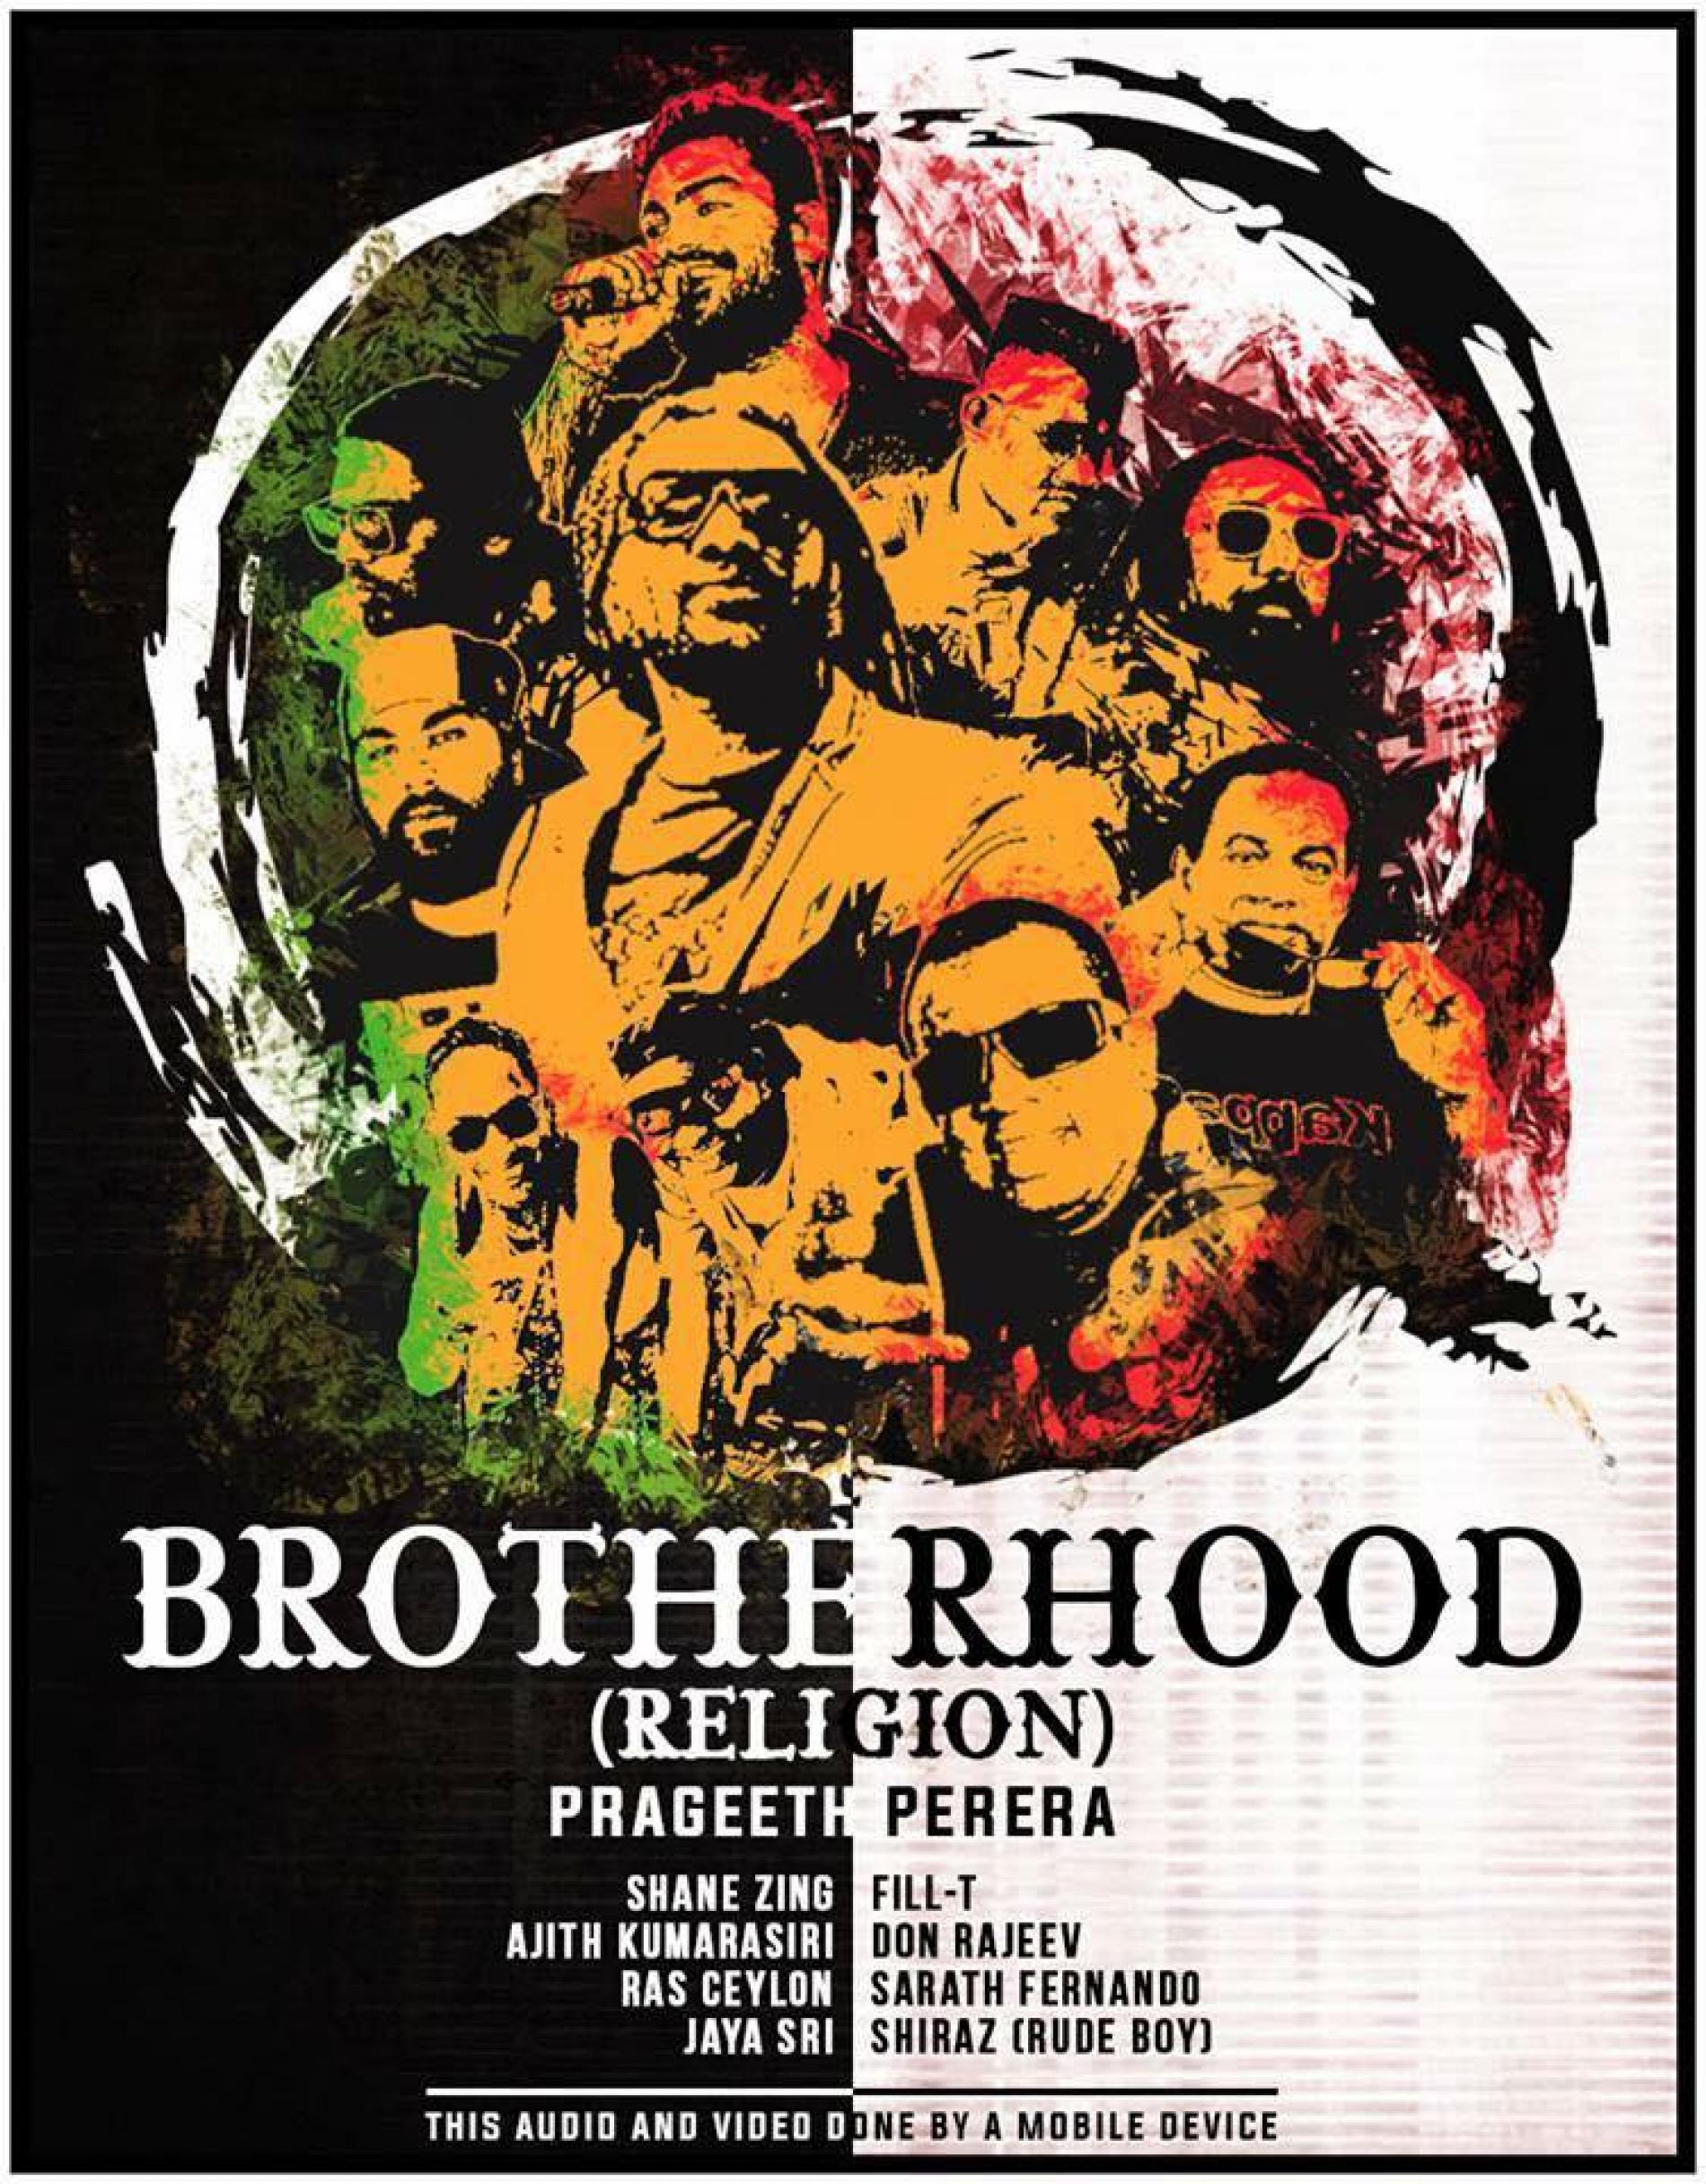 Brotherhood (religion) – Prageeth Perera & Various Artists